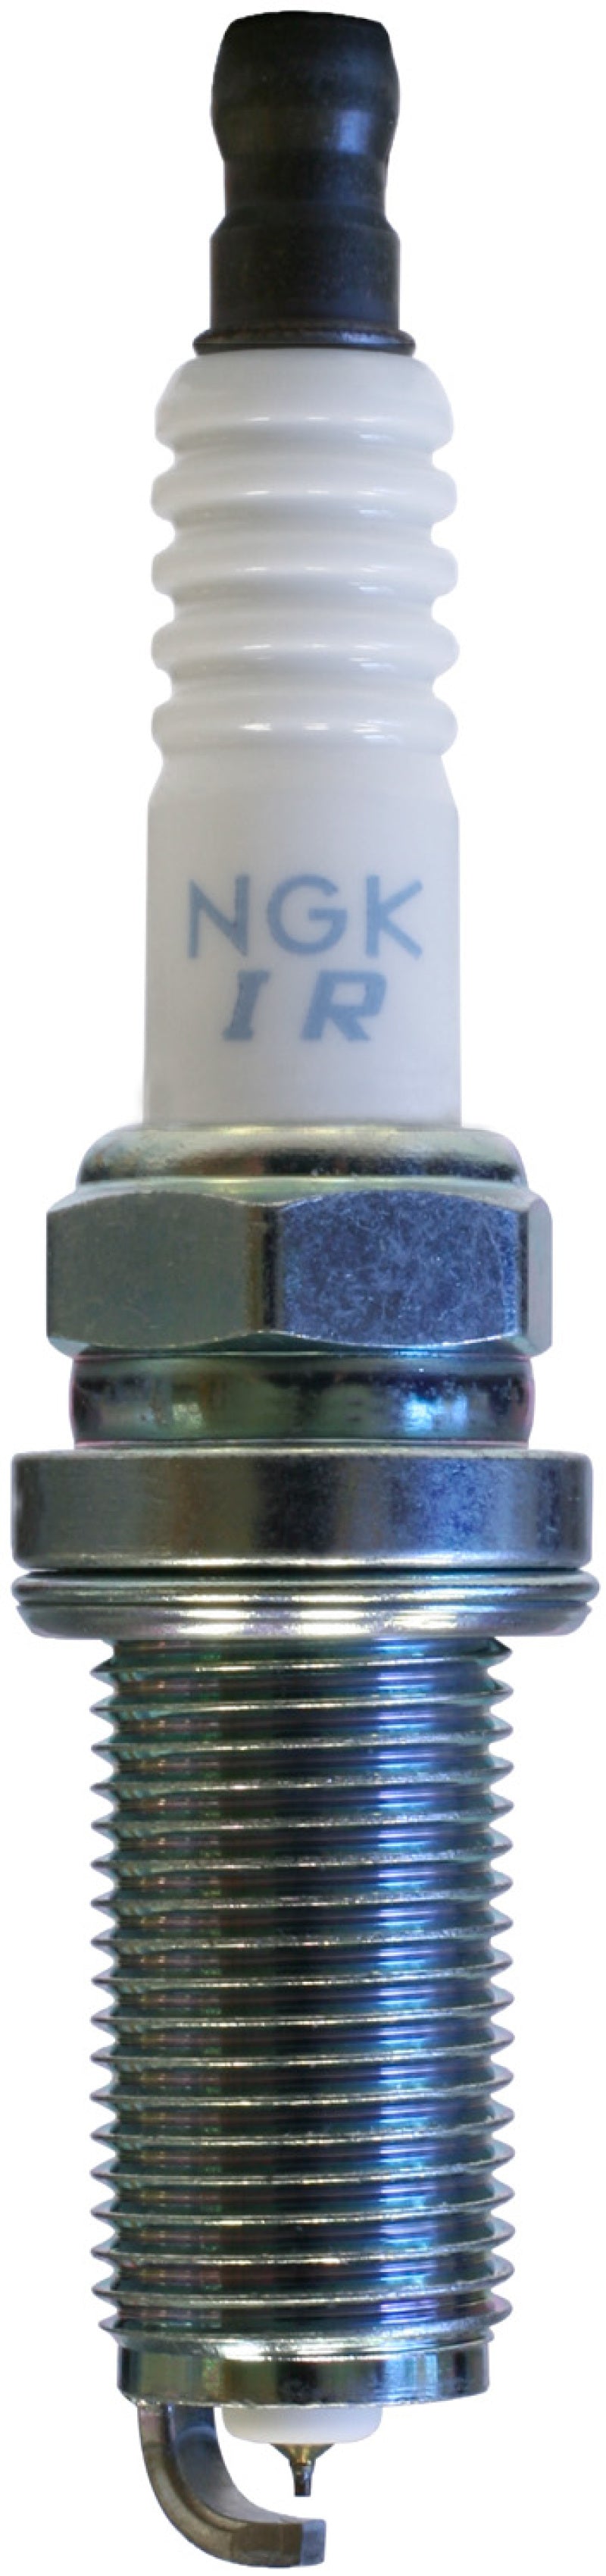 NGK Laser Iridium Long Life Spark Plug Box of 4 (SILFR6A)